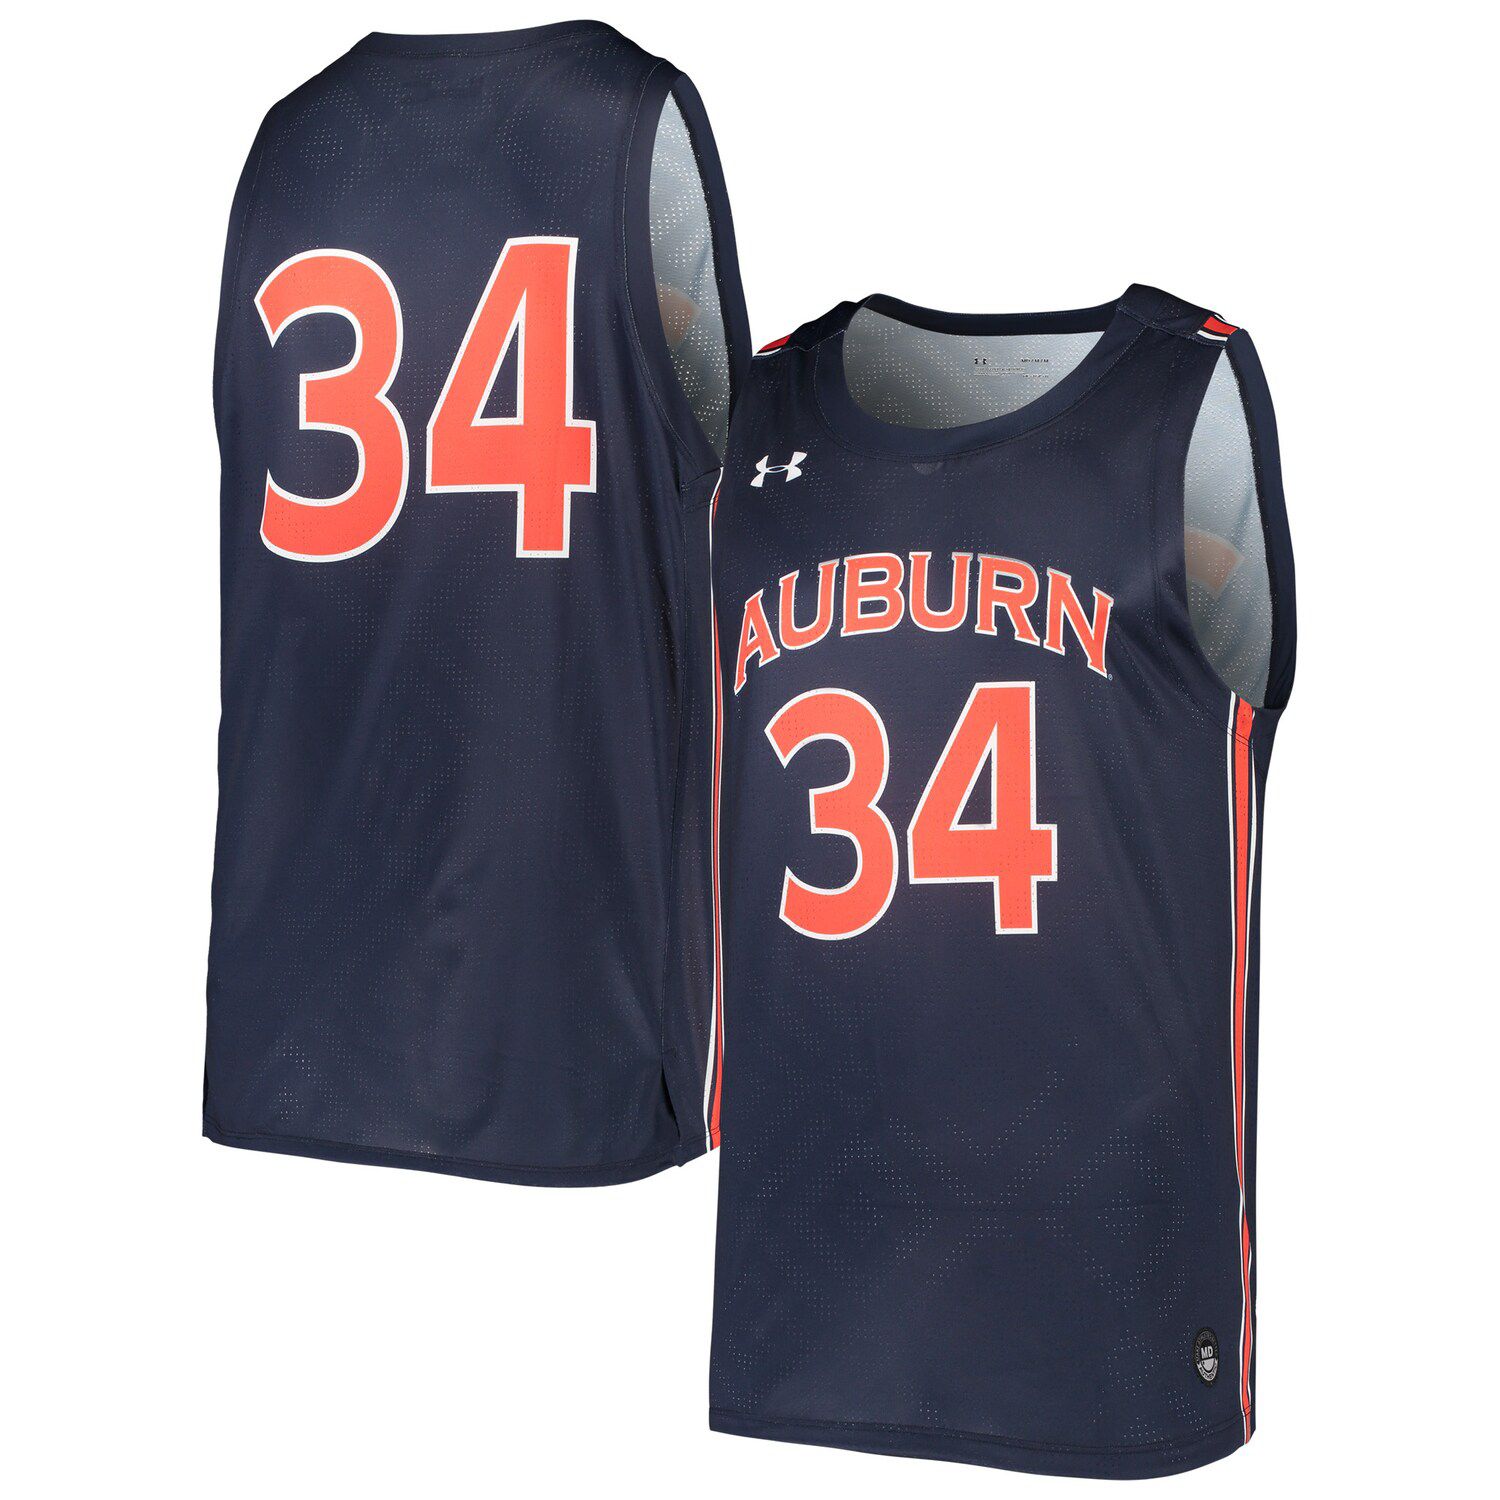 auburn university basketball jersey